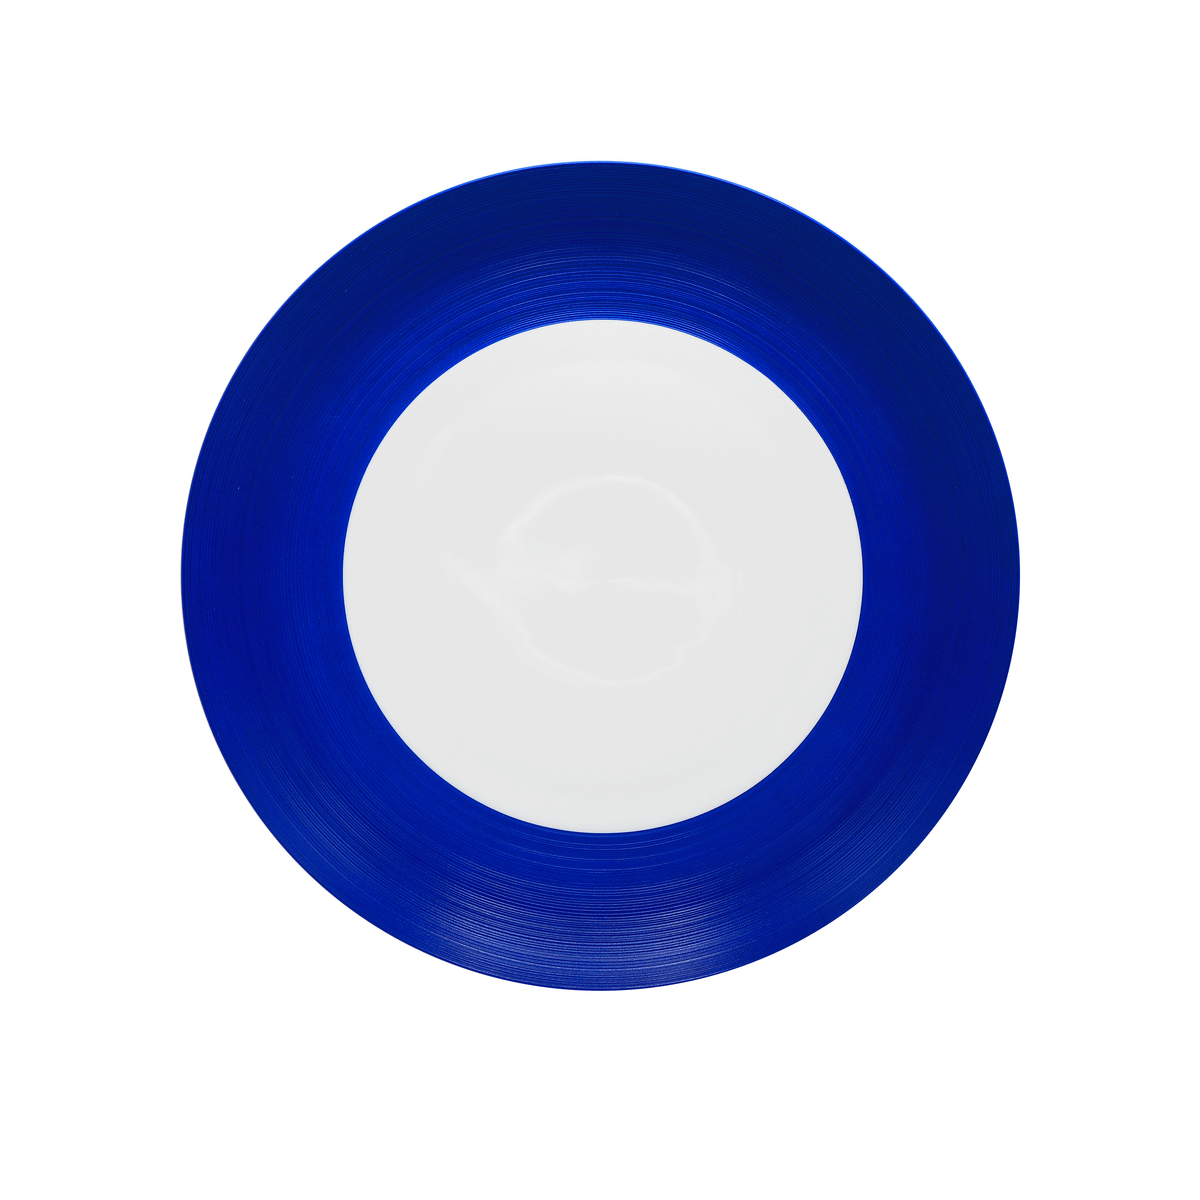 HEMISPHERE Royal Blue - Flat round dish, maxi